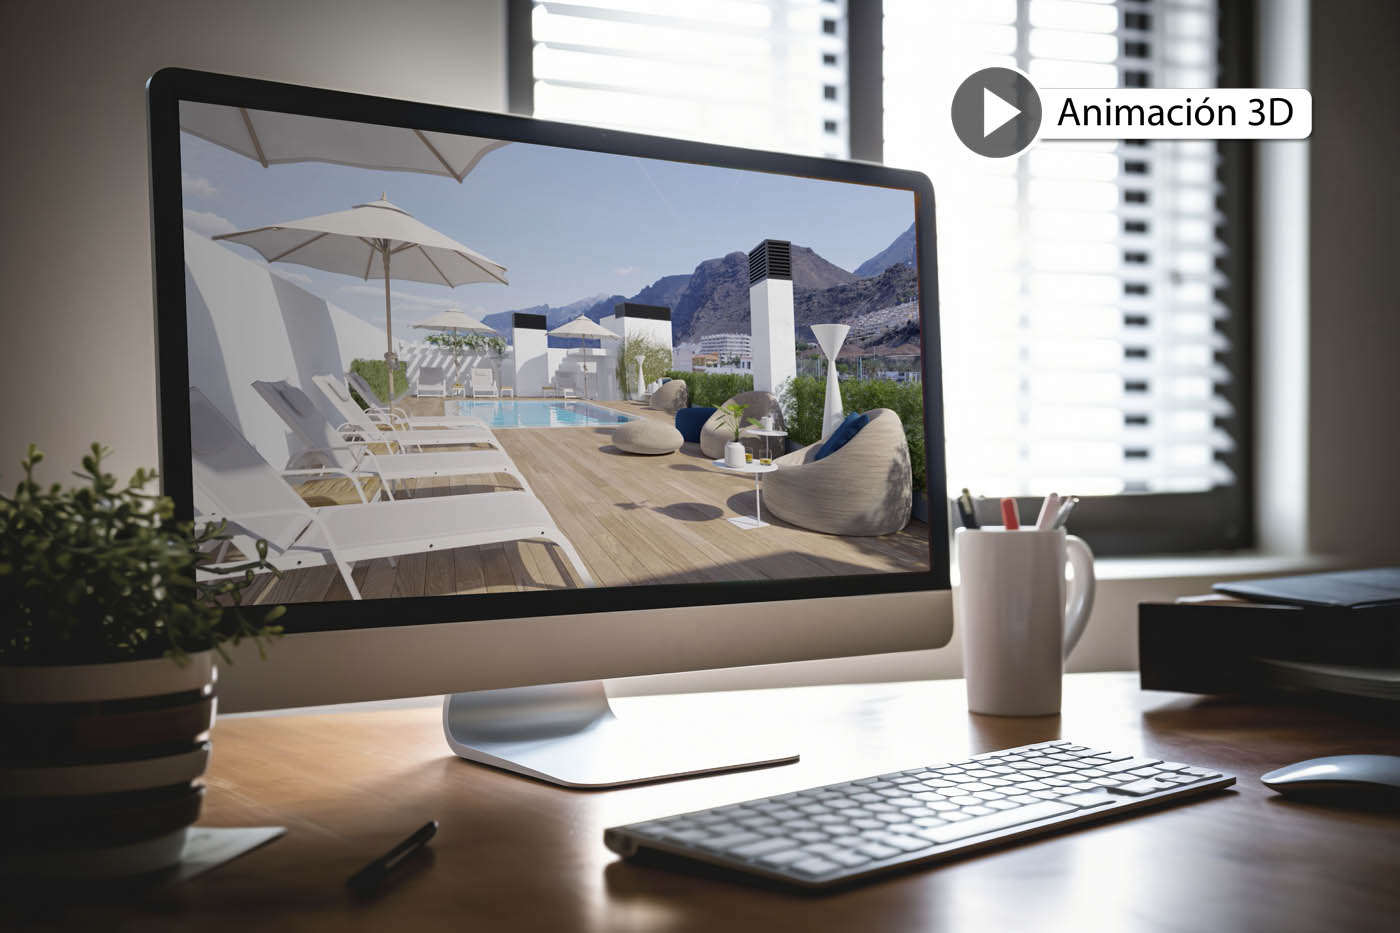 Vídeo con animación 3D de un edificio residencial en Tenerife